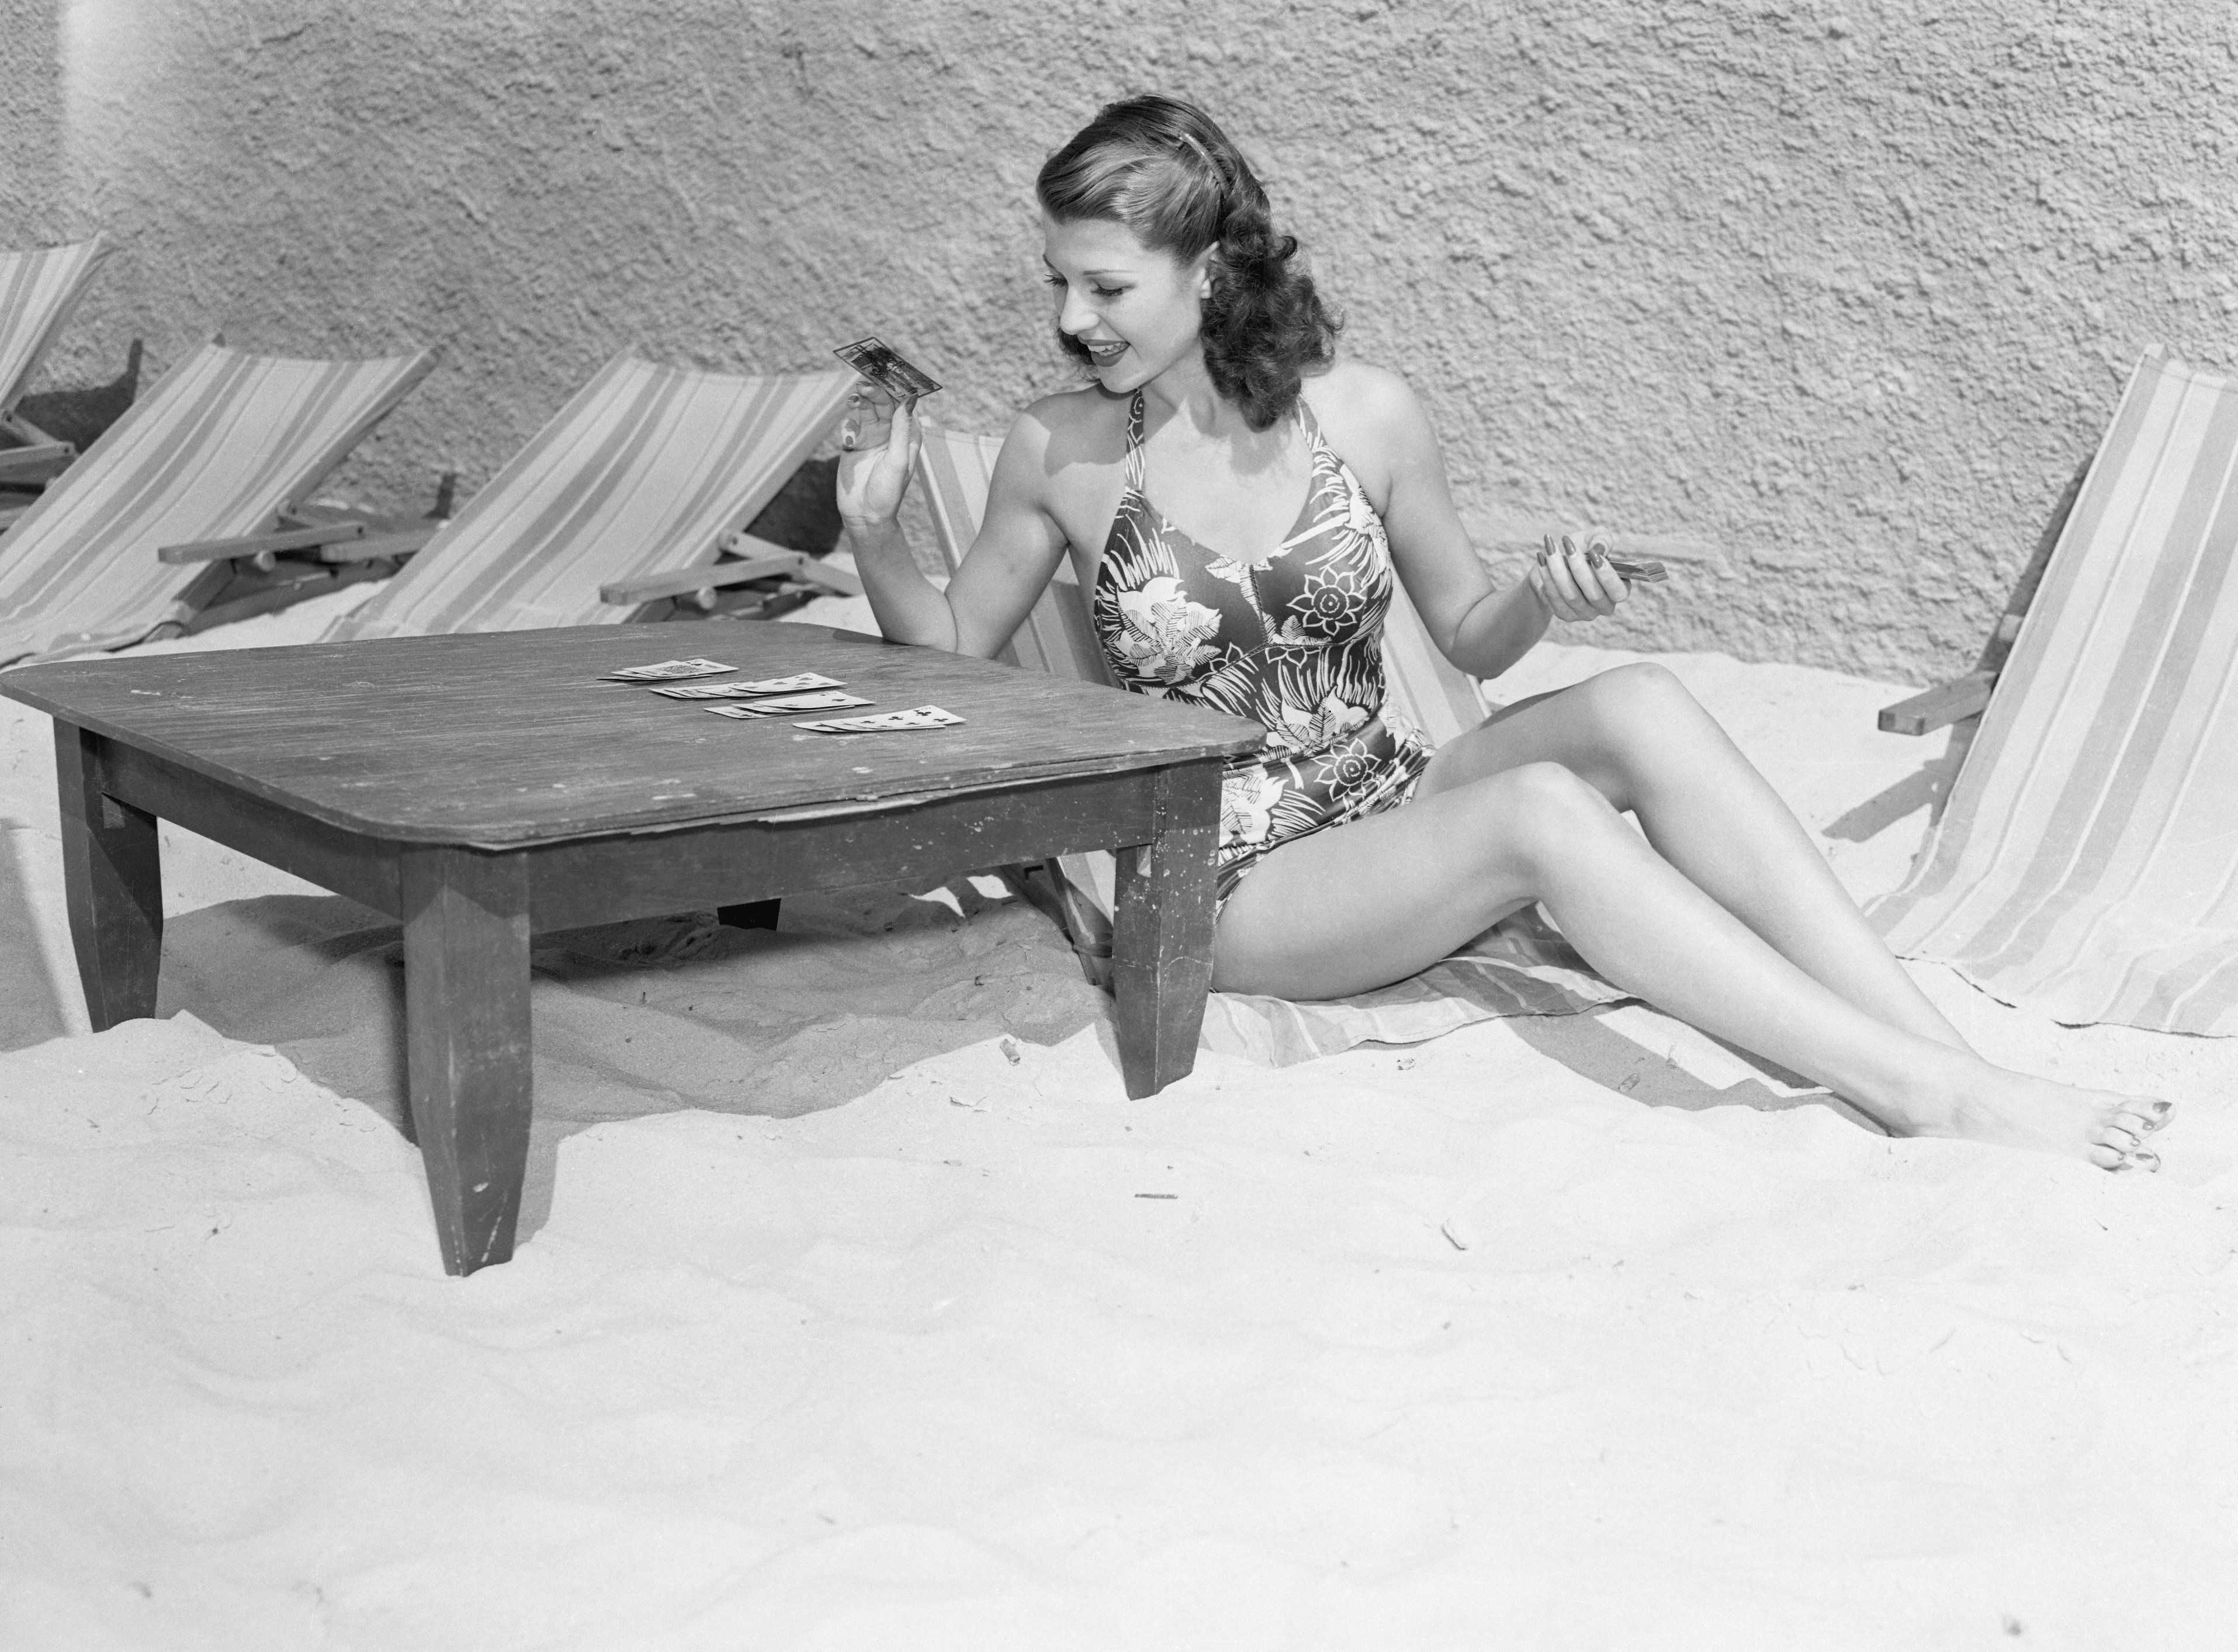 Rita Hayworth Playing Cards at a Beach